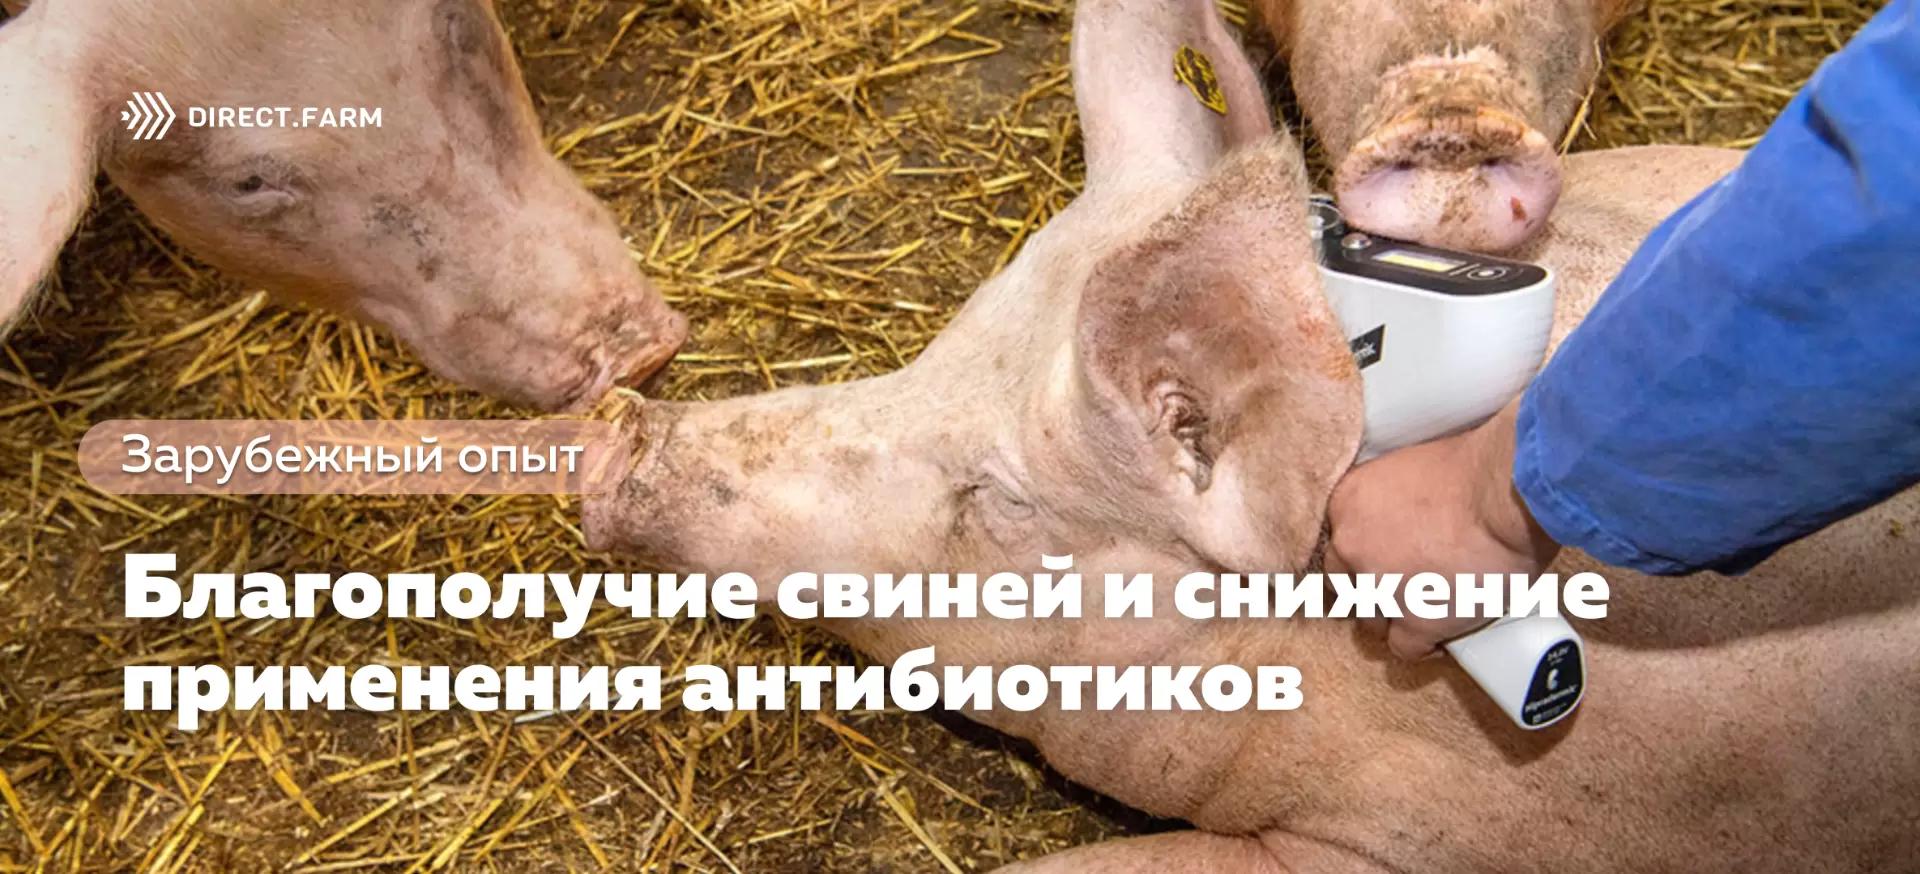 Связано ли сокращение использования антибиотиков с благополучием свиней?